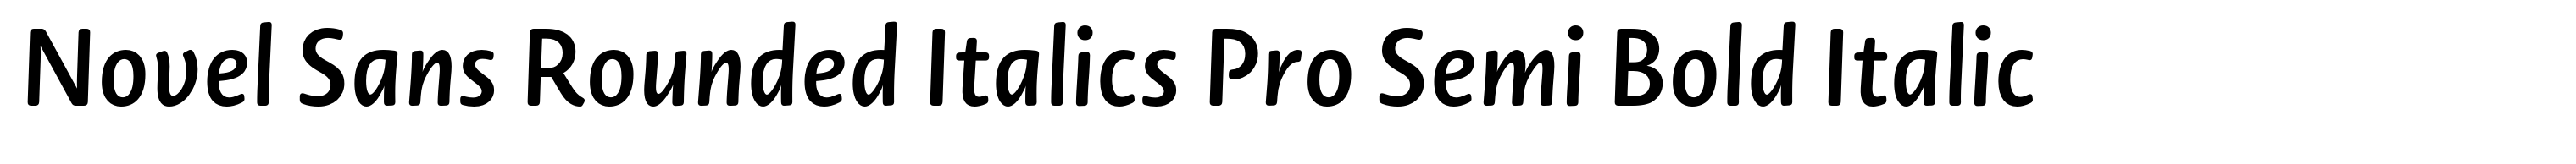 Novel Sans Rounded Italics Pro Semi Bold Italic